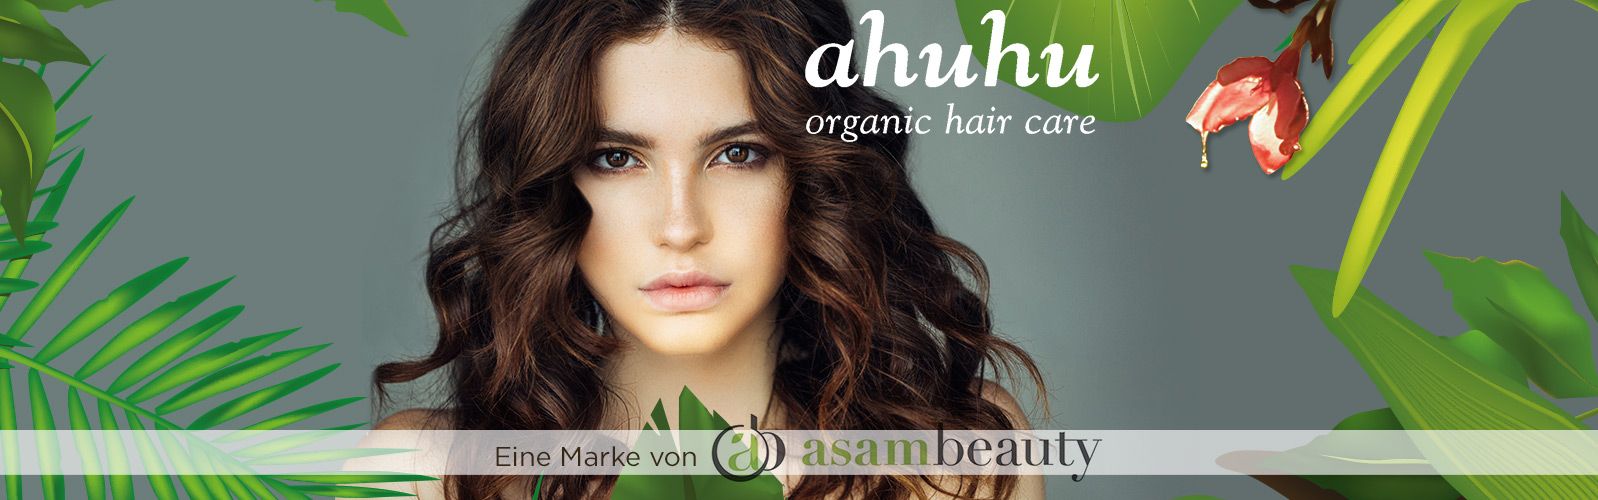 ahuhu oragnic hair care Haarpflege